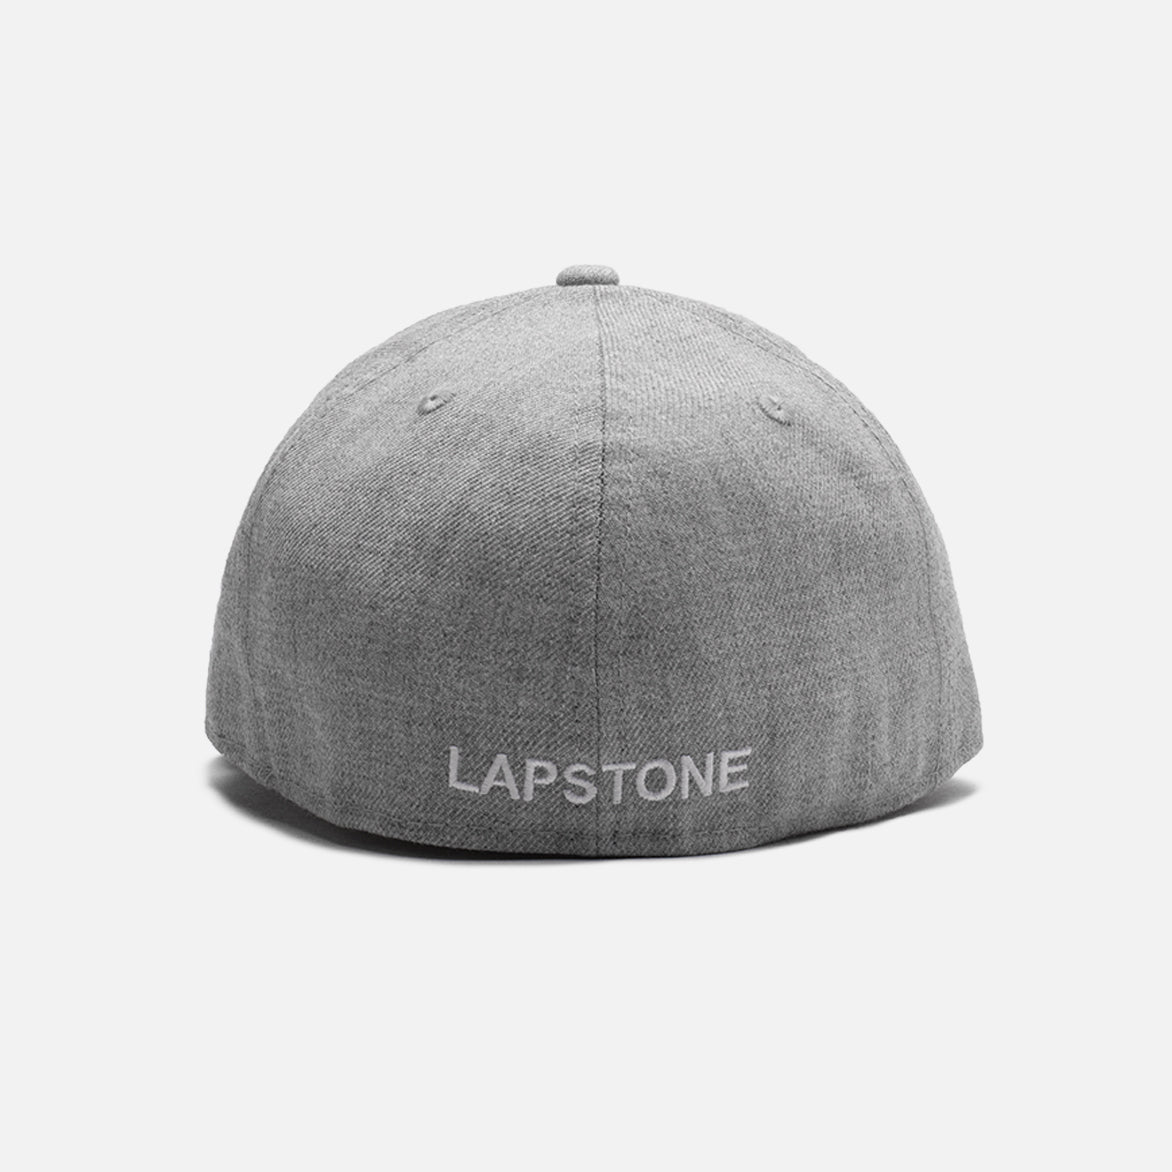 LAPSTONE X NEW ERA LOW PROFILE 5950 CAP - HEATHER GREY